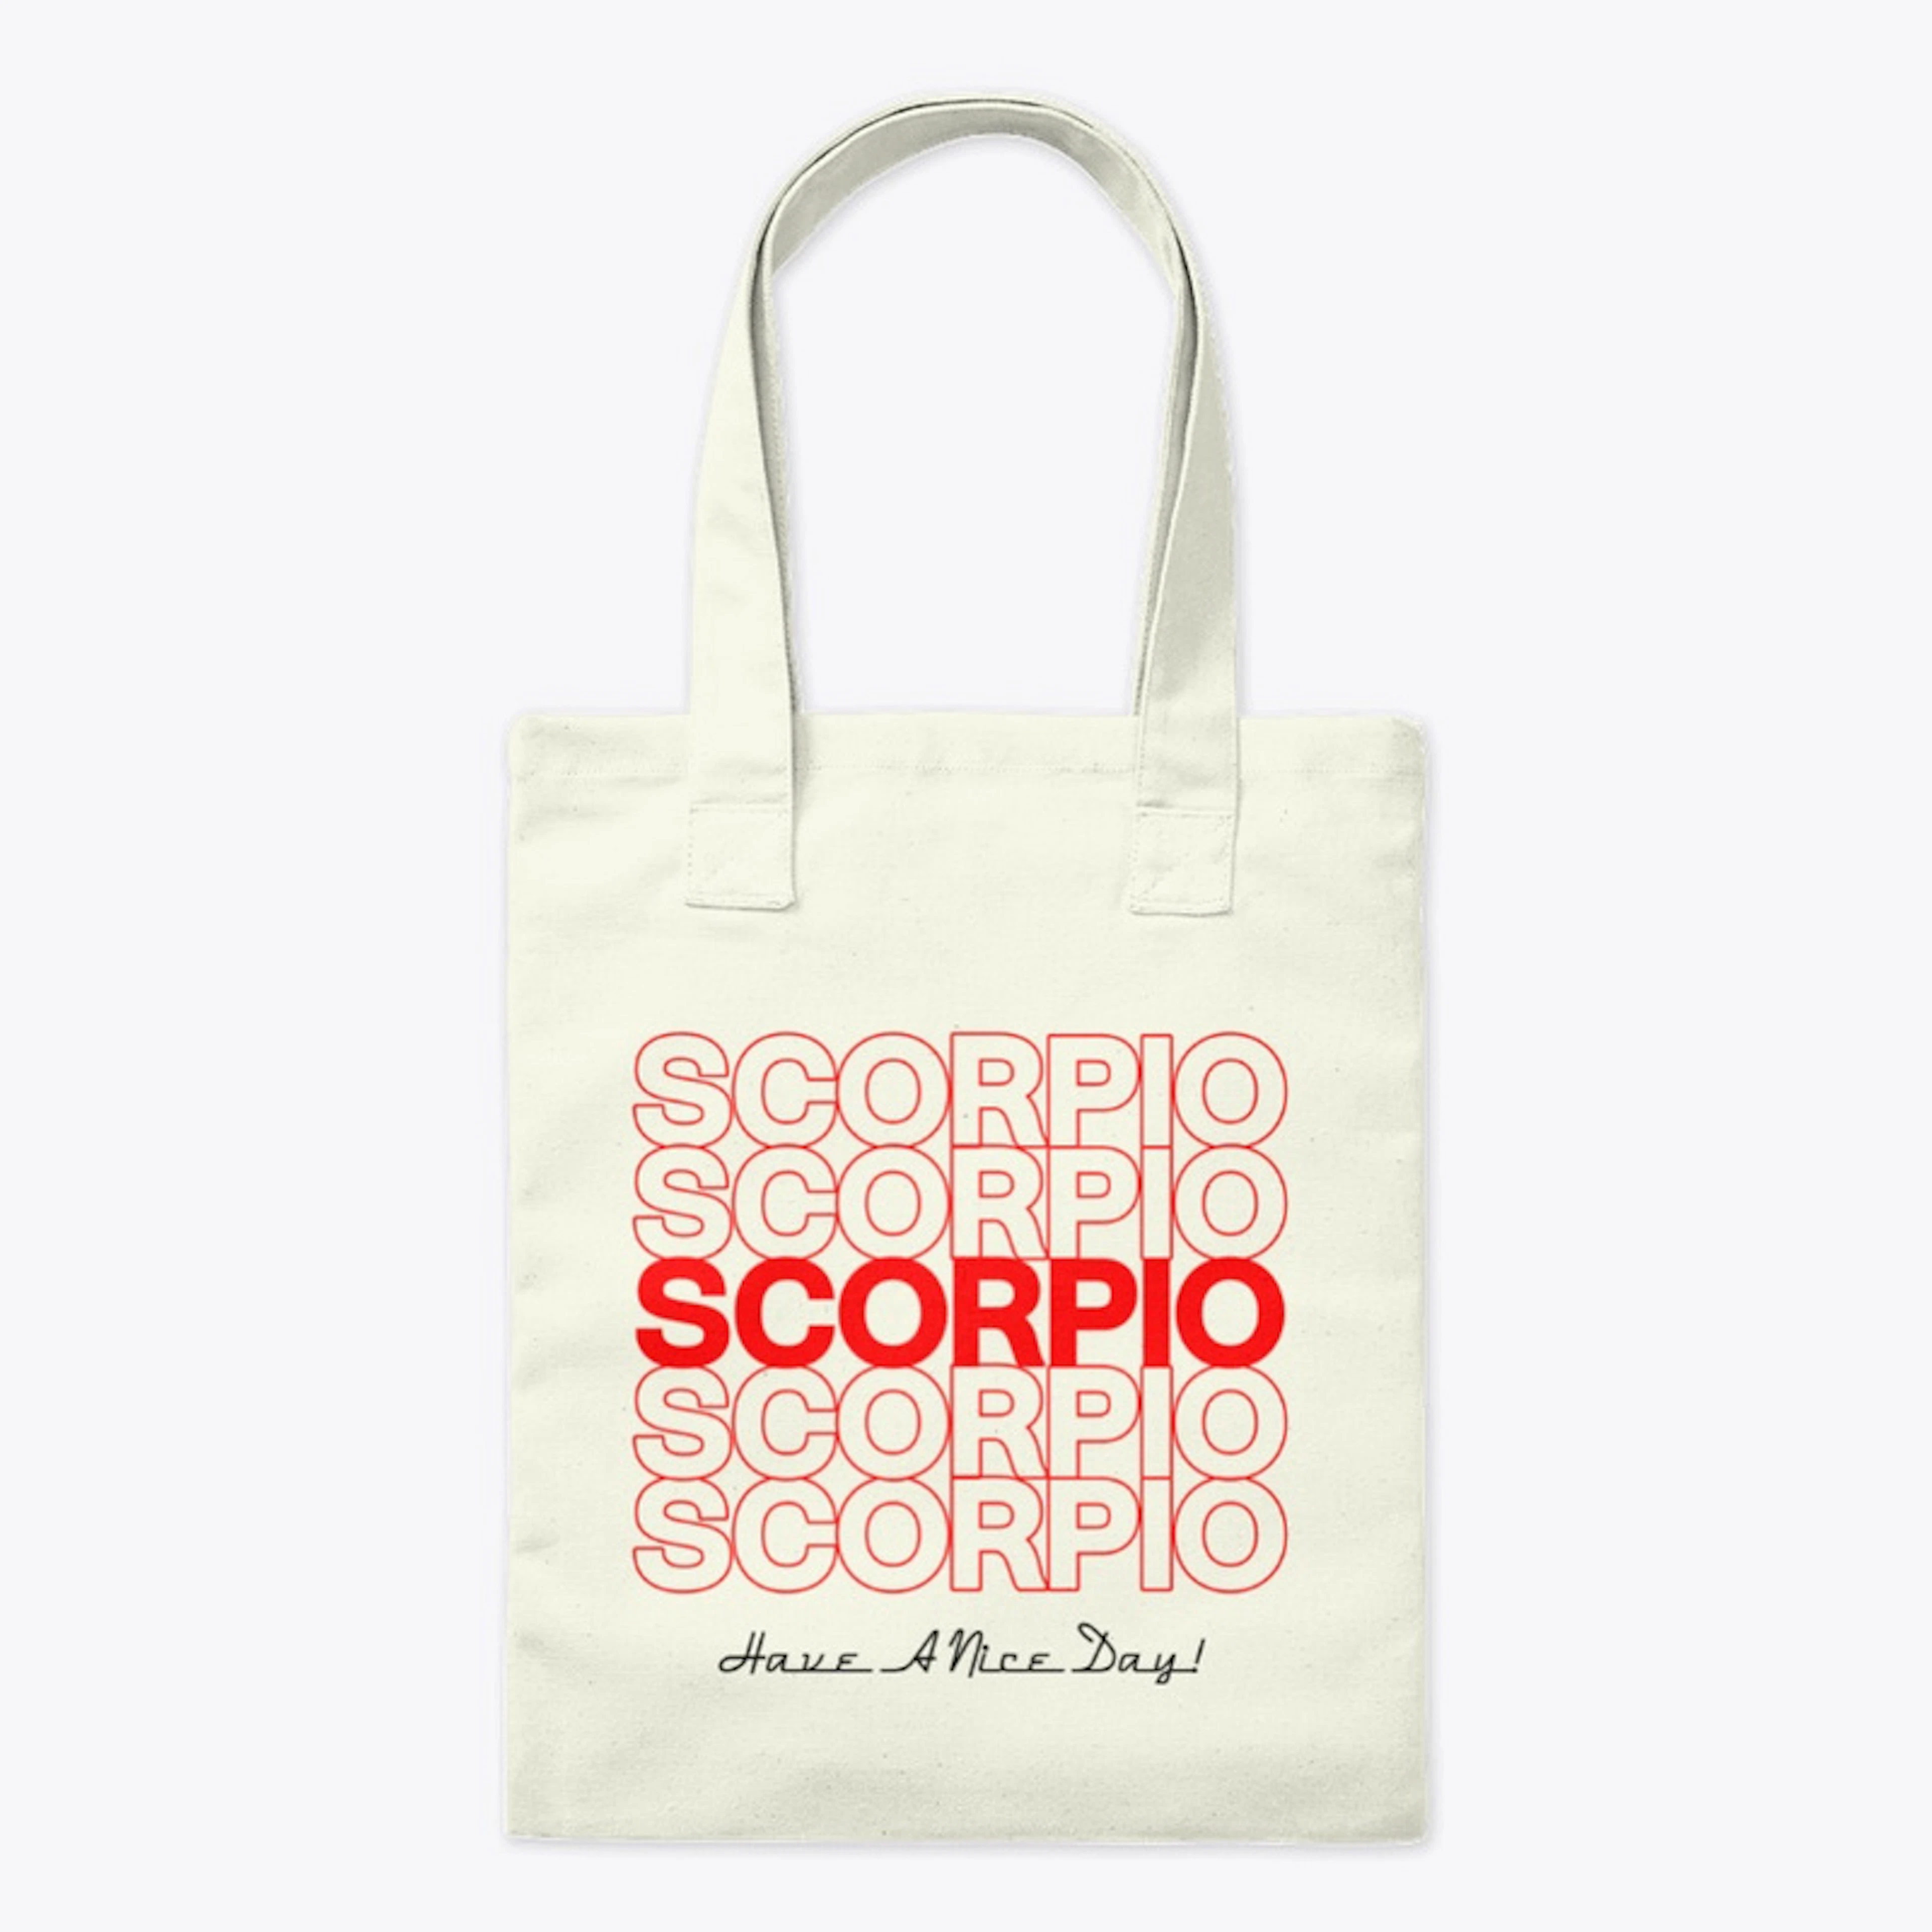 Scorpio H.A.N.D.BAG